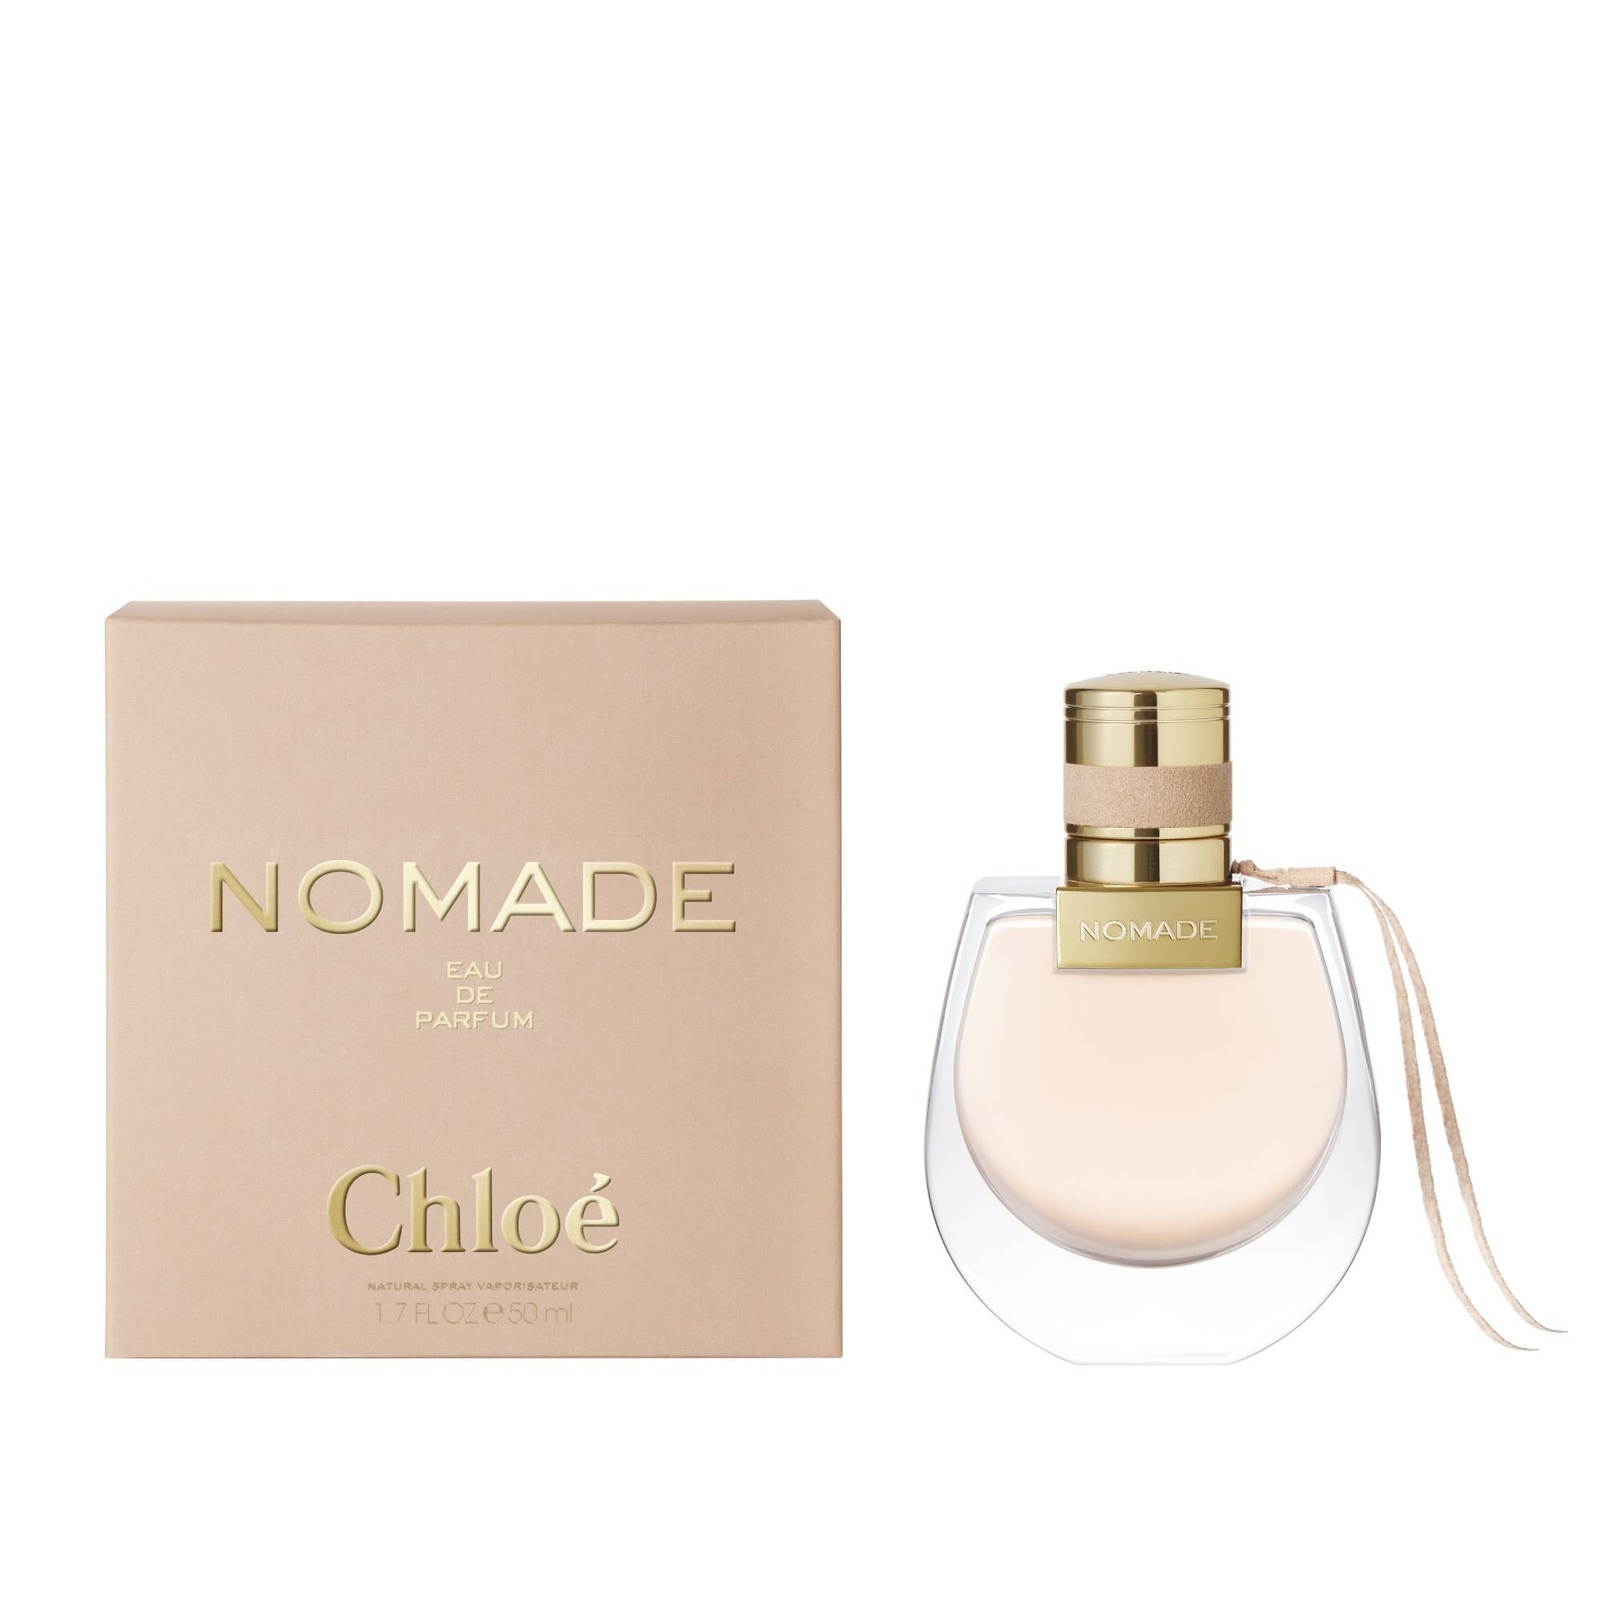 Nomade by Chloe - Women’s Perfume - Perfumery